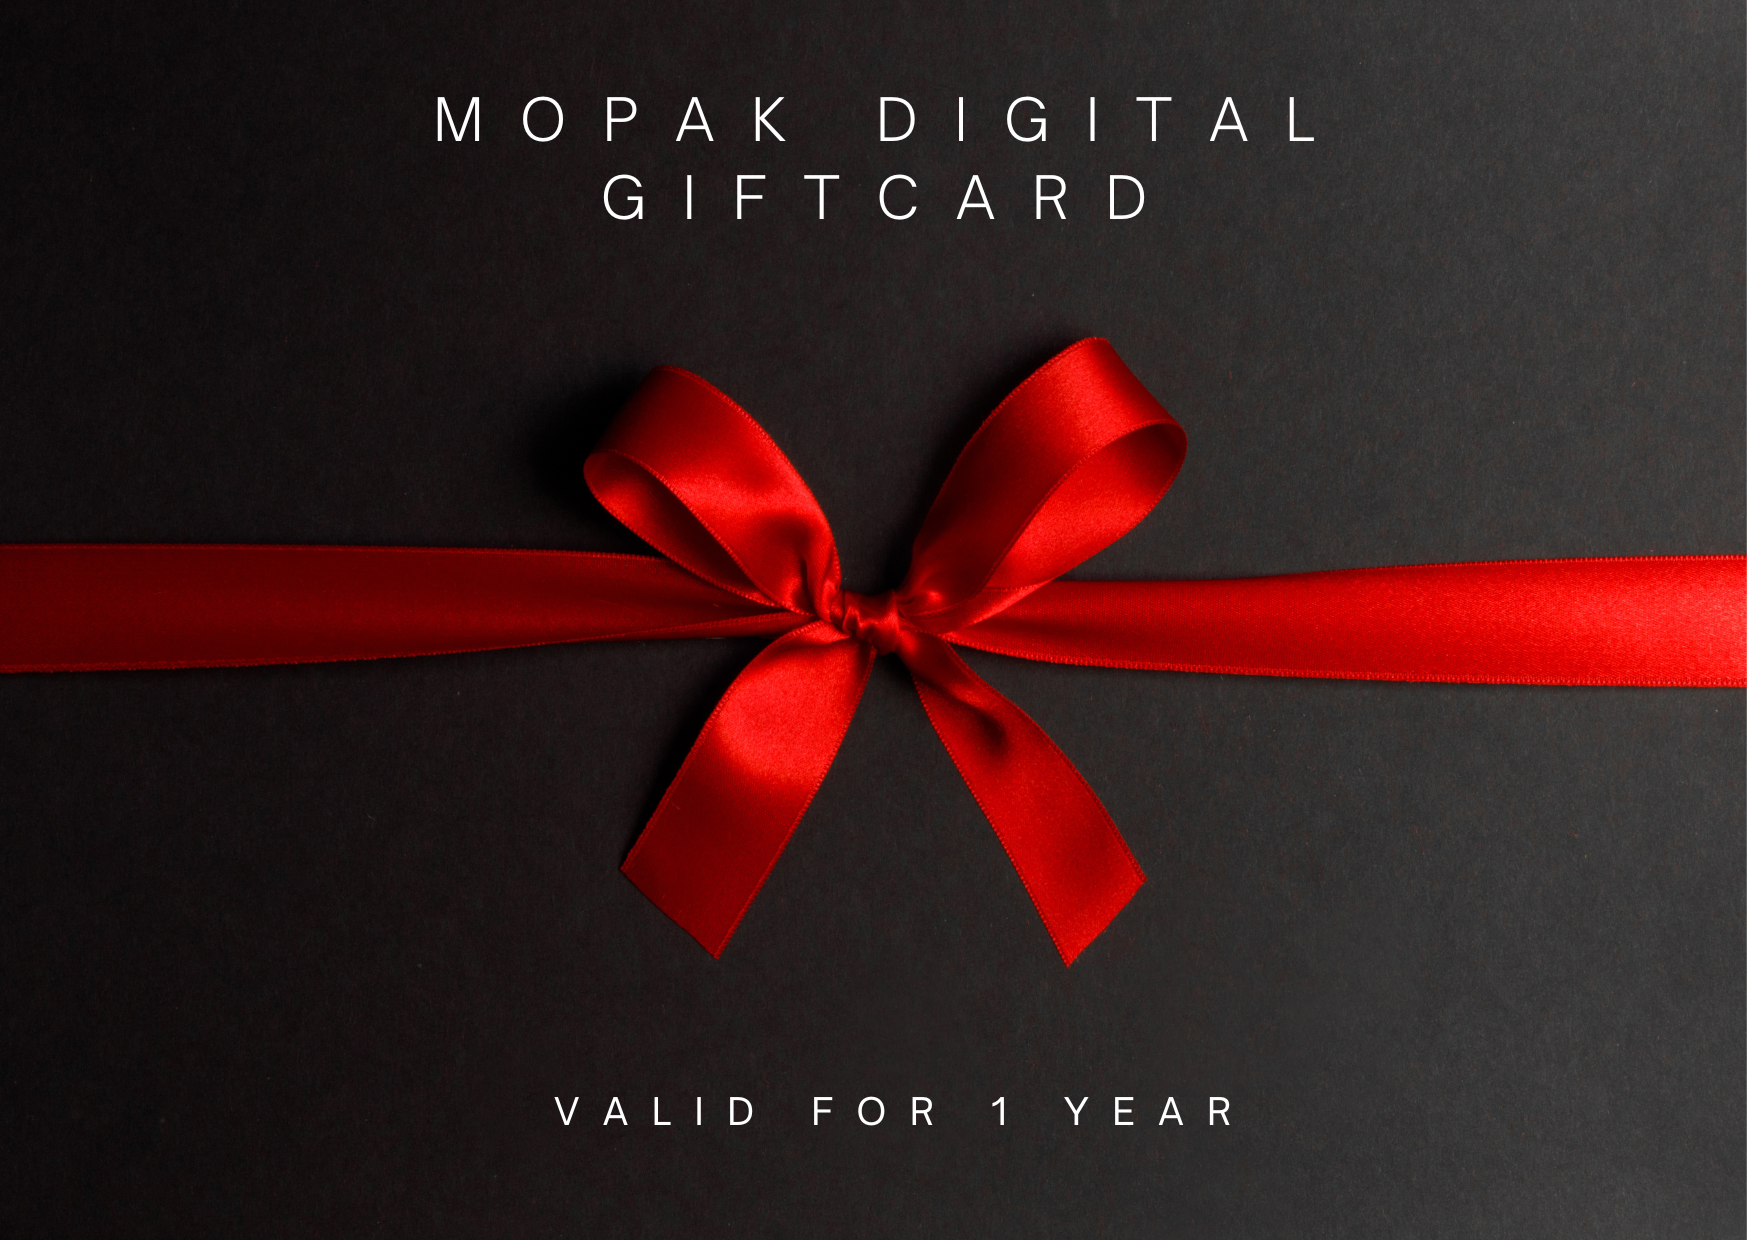 mopak digital gift card gift voucher